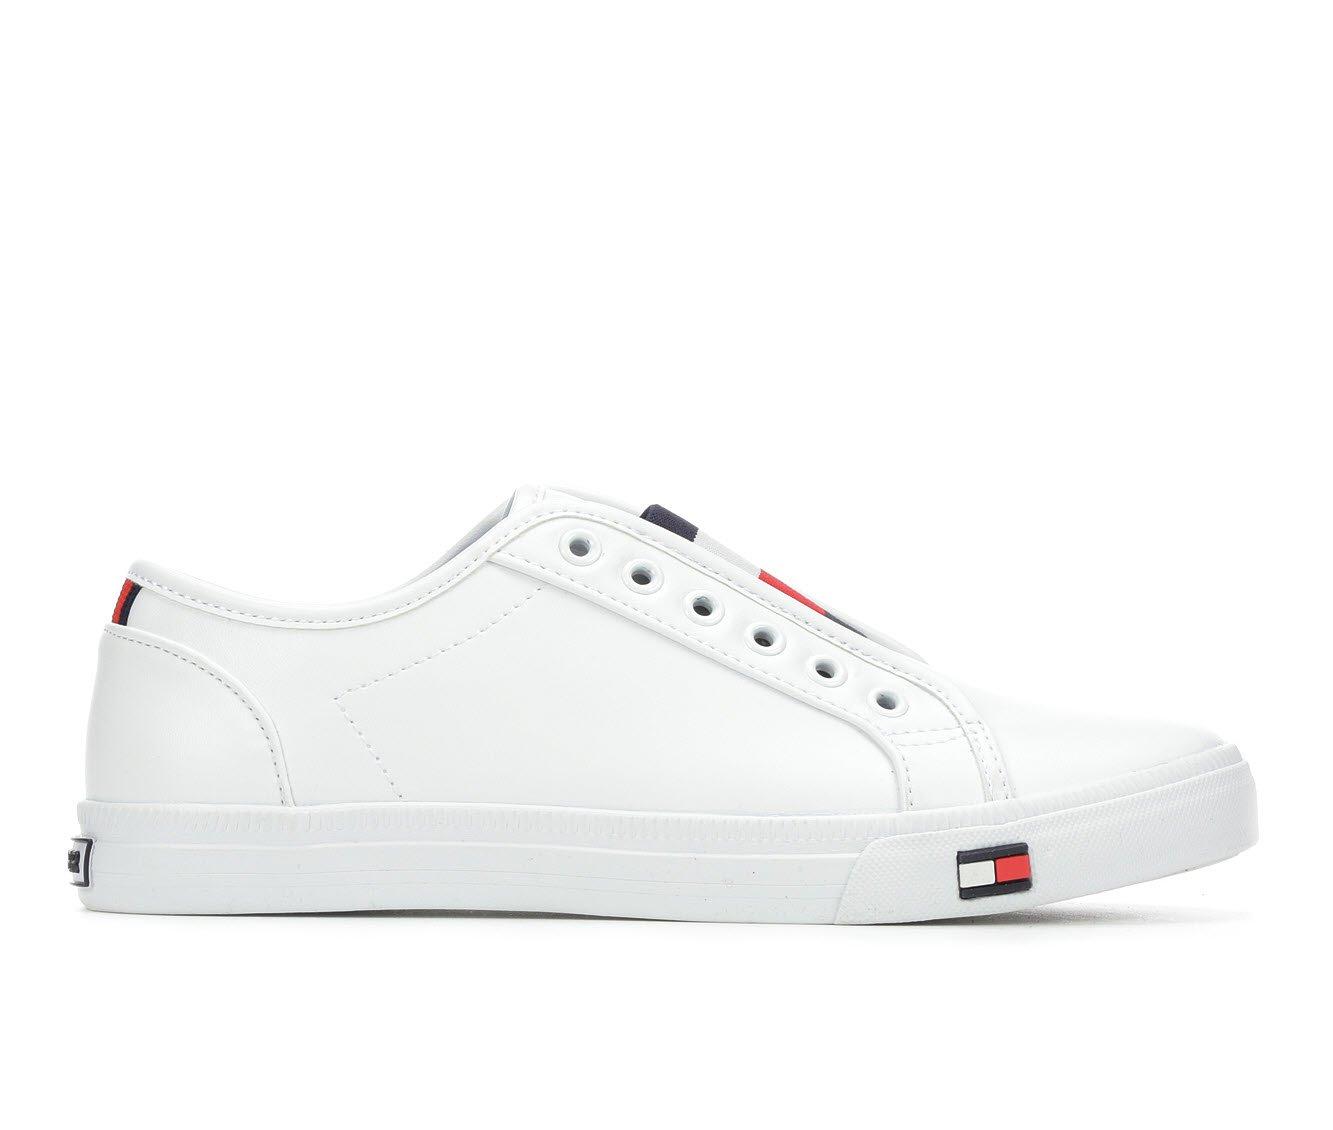  Tommy Hilfiger Women's Anni Slip-On Sneaker | Fashion Sneakers